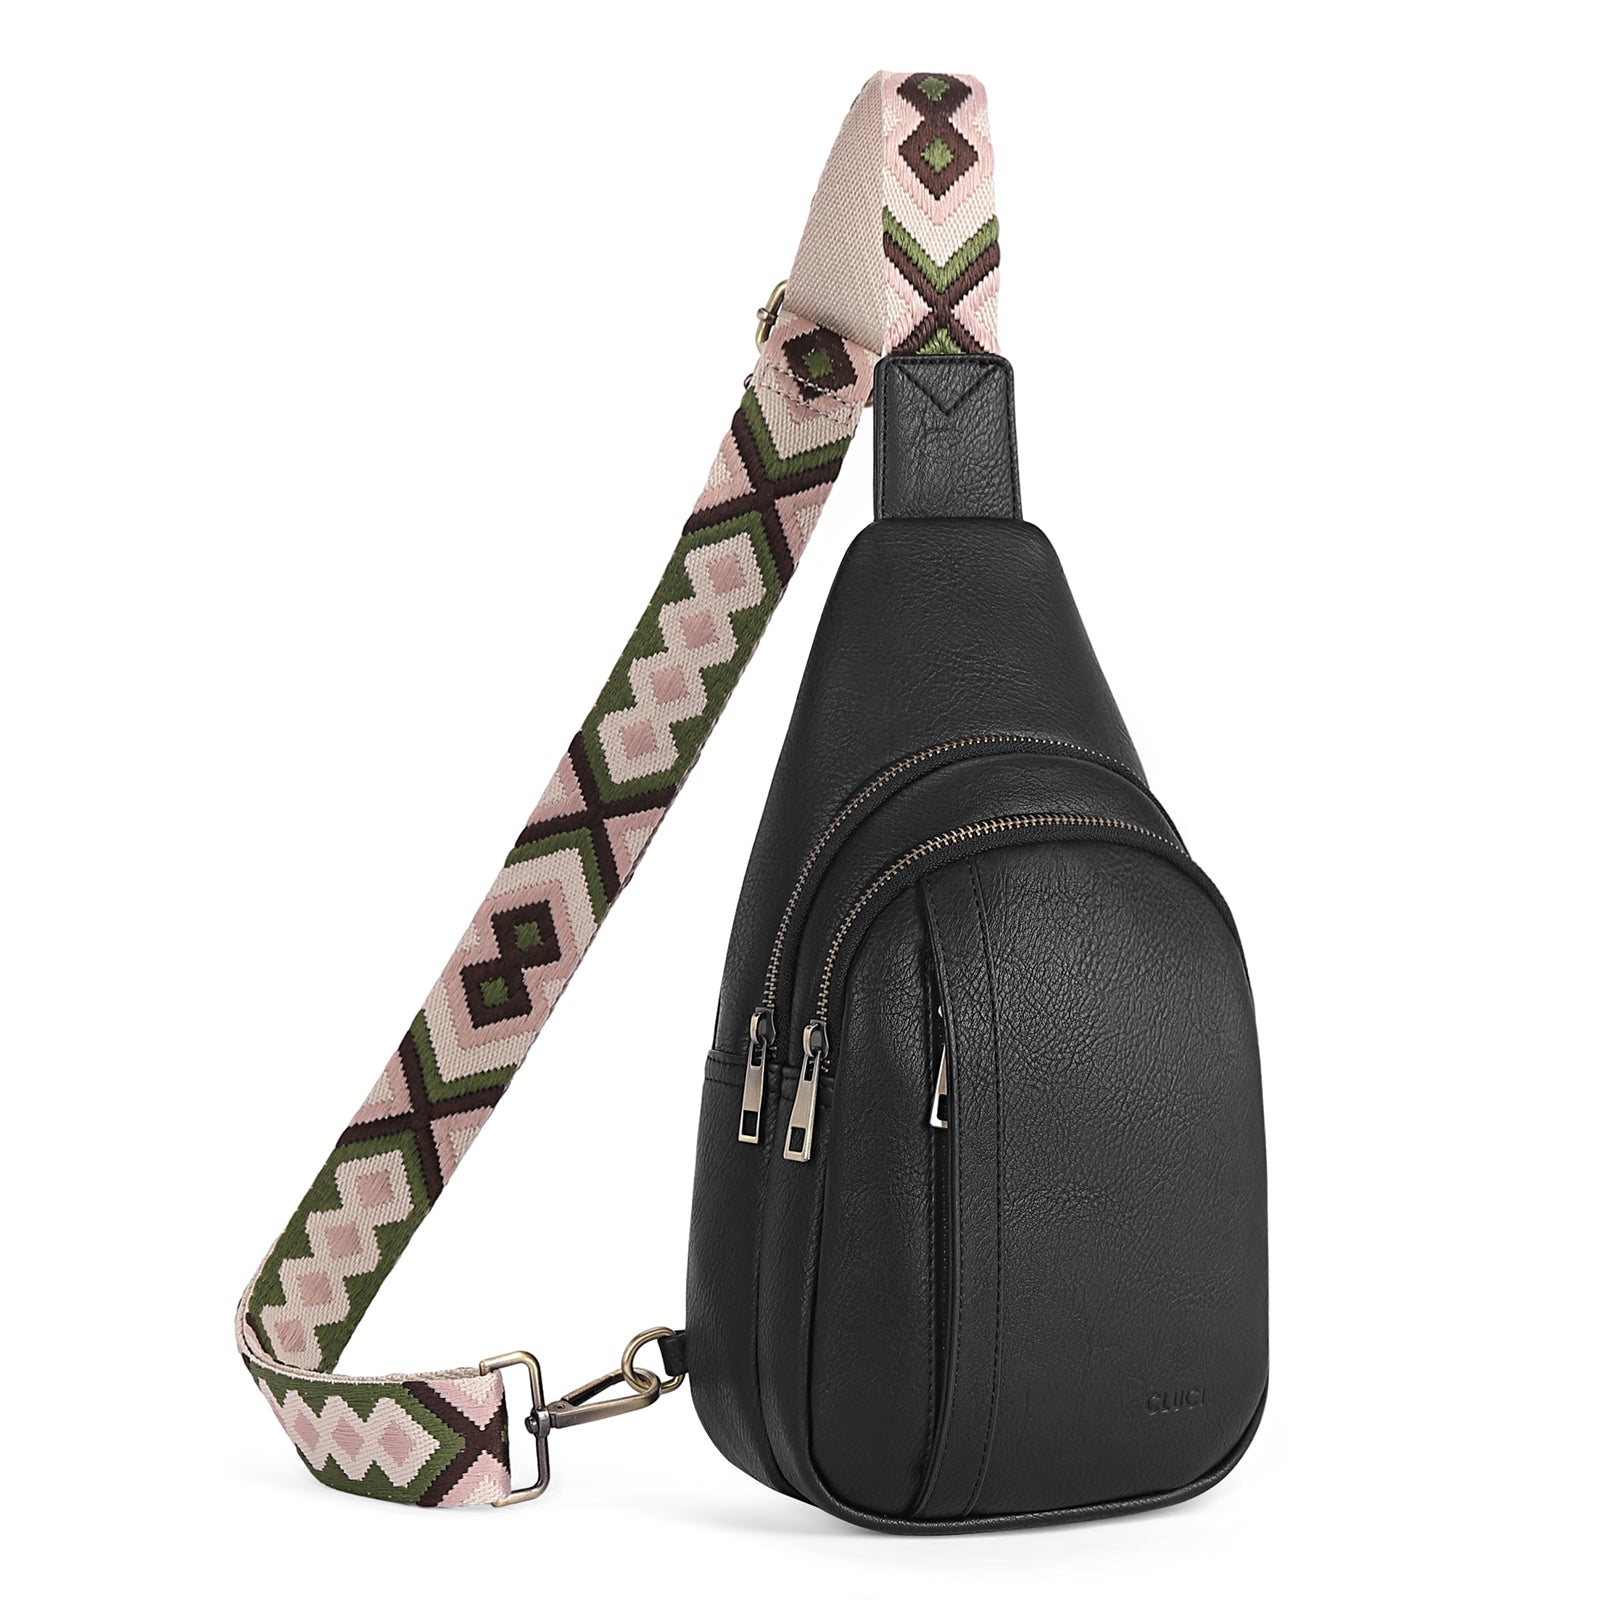 CLUCI Sling Bag for Women Crossbody Leather Large Sling Backpack